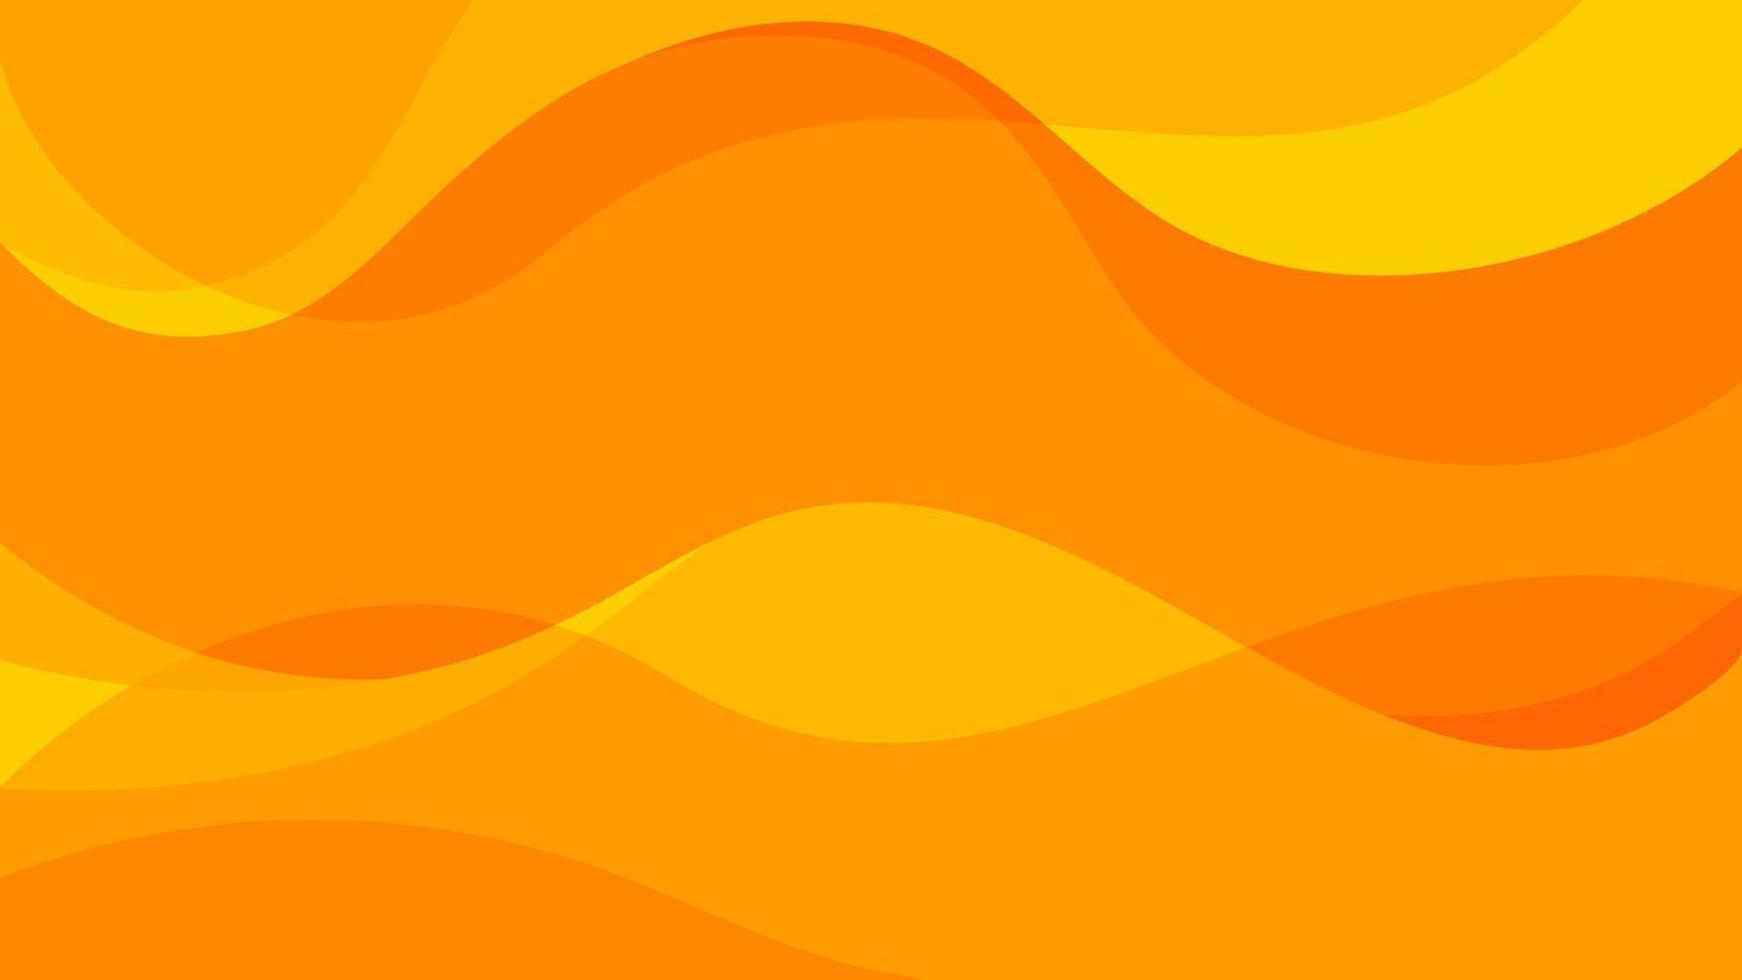 Abstract orange background design vector